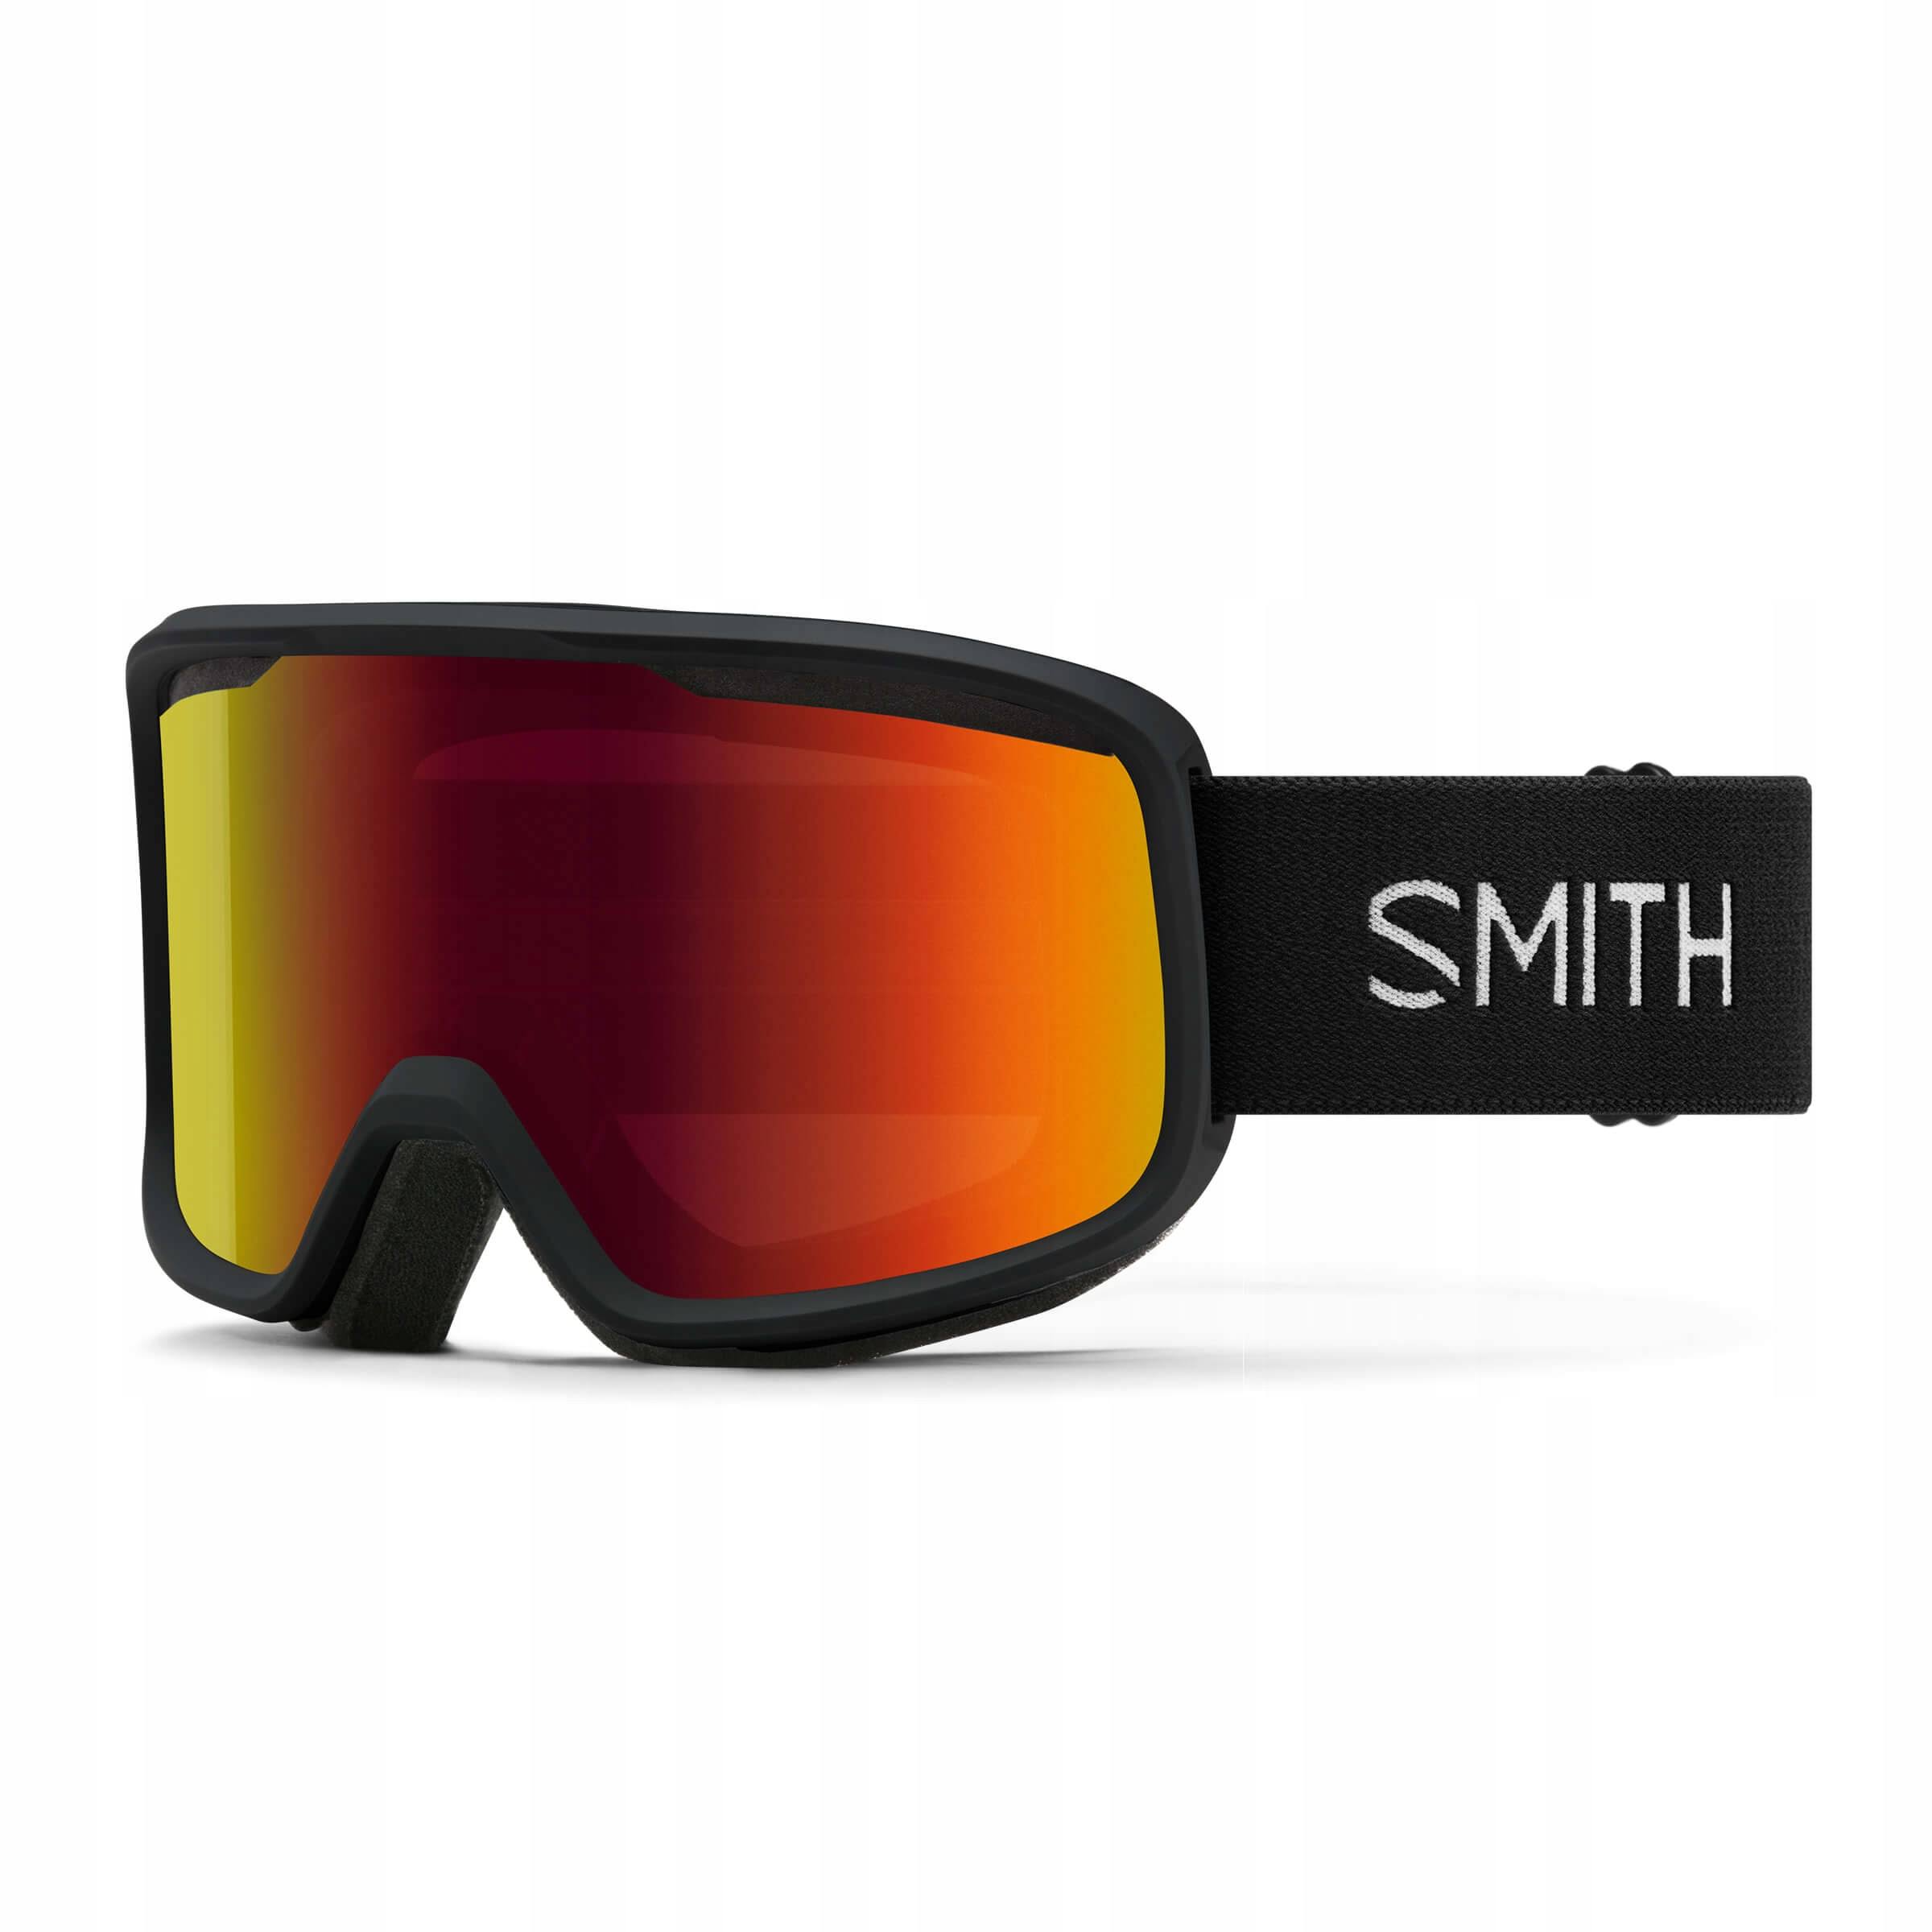 Smith - Frontier Black Red Sol-X Mirror - Goggles